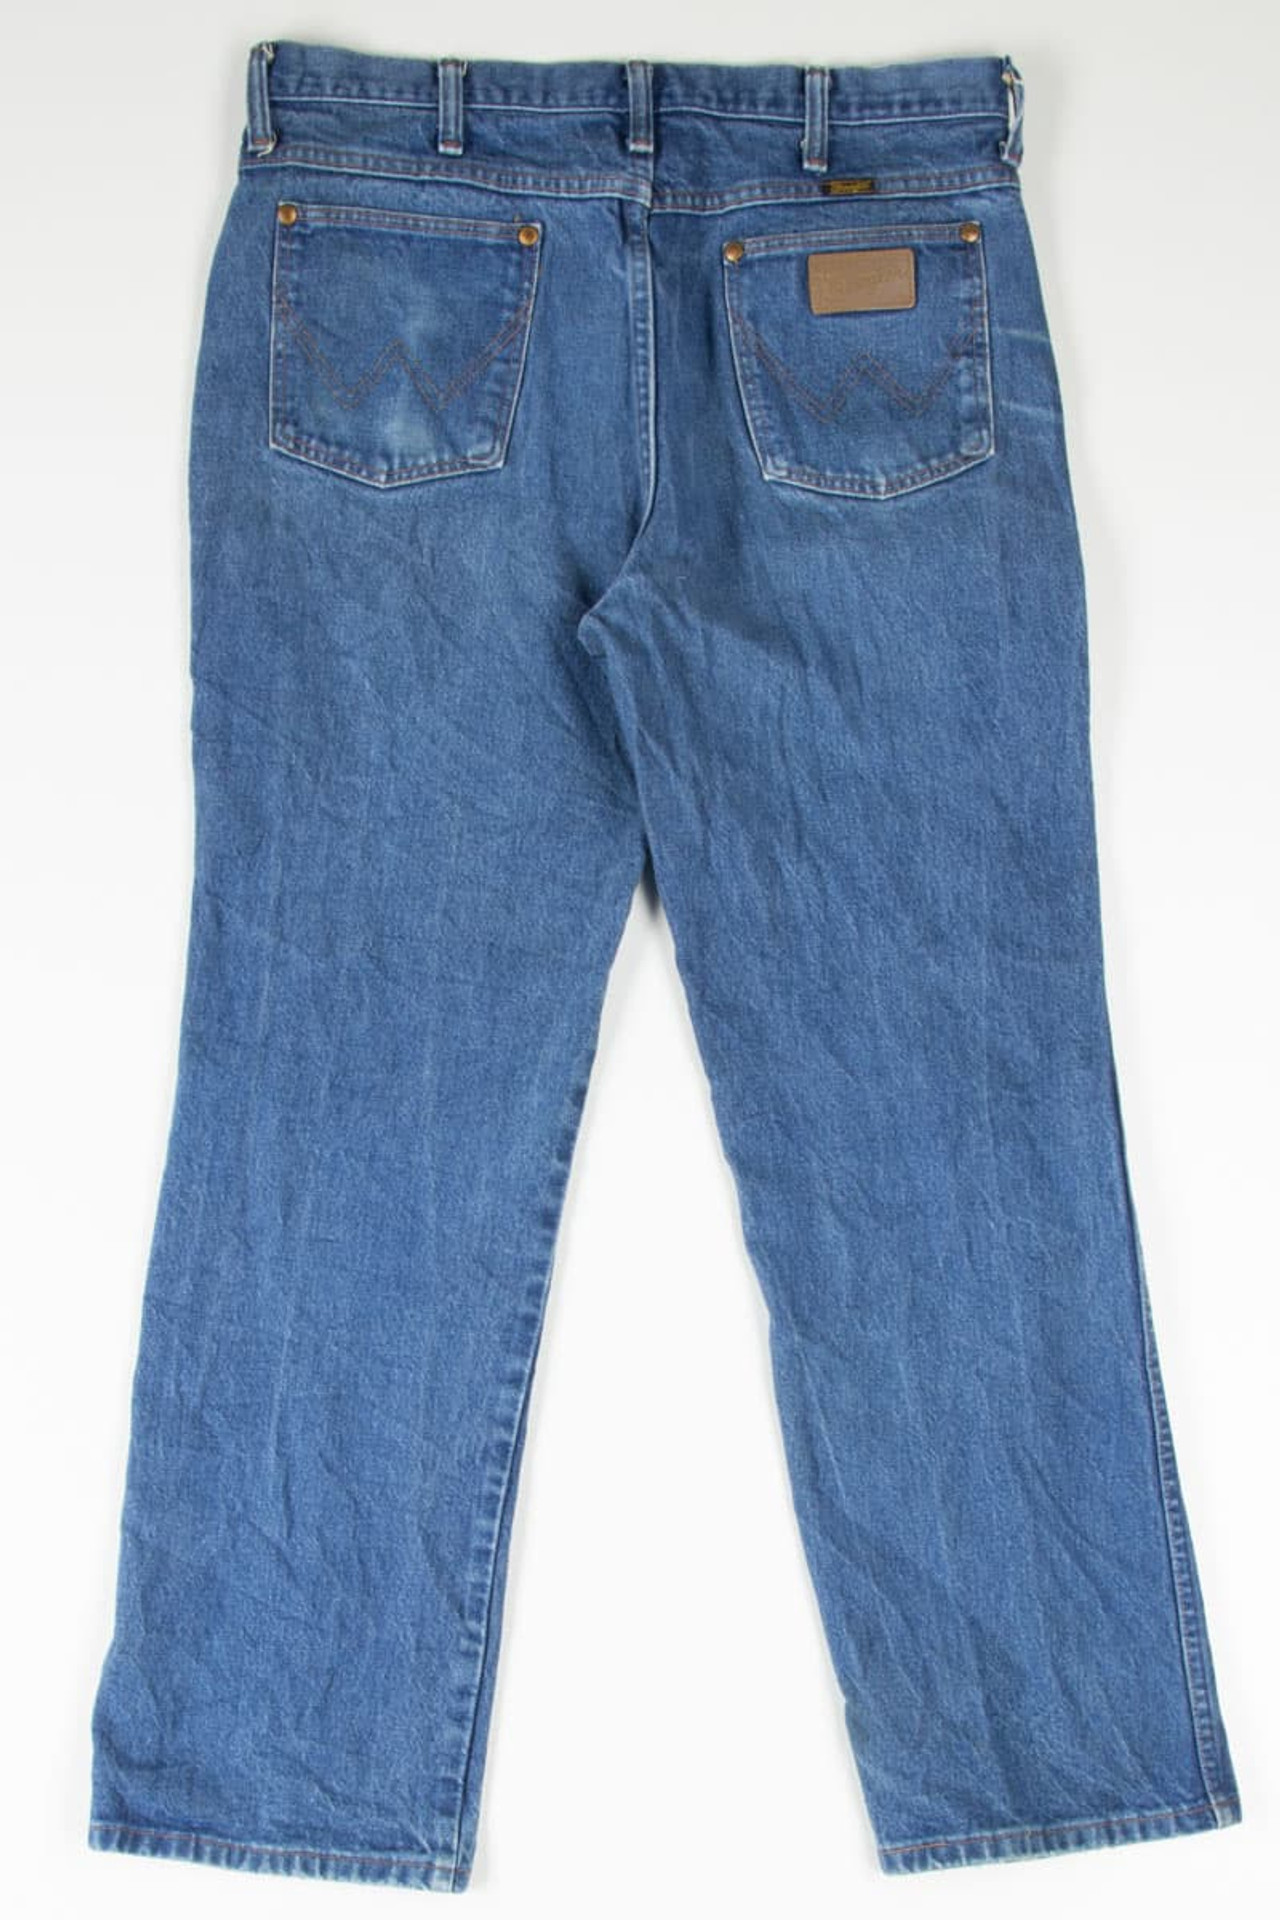 Wrangler Denim Jeans 642 (sz. 34W 32L) - Ragstock.com